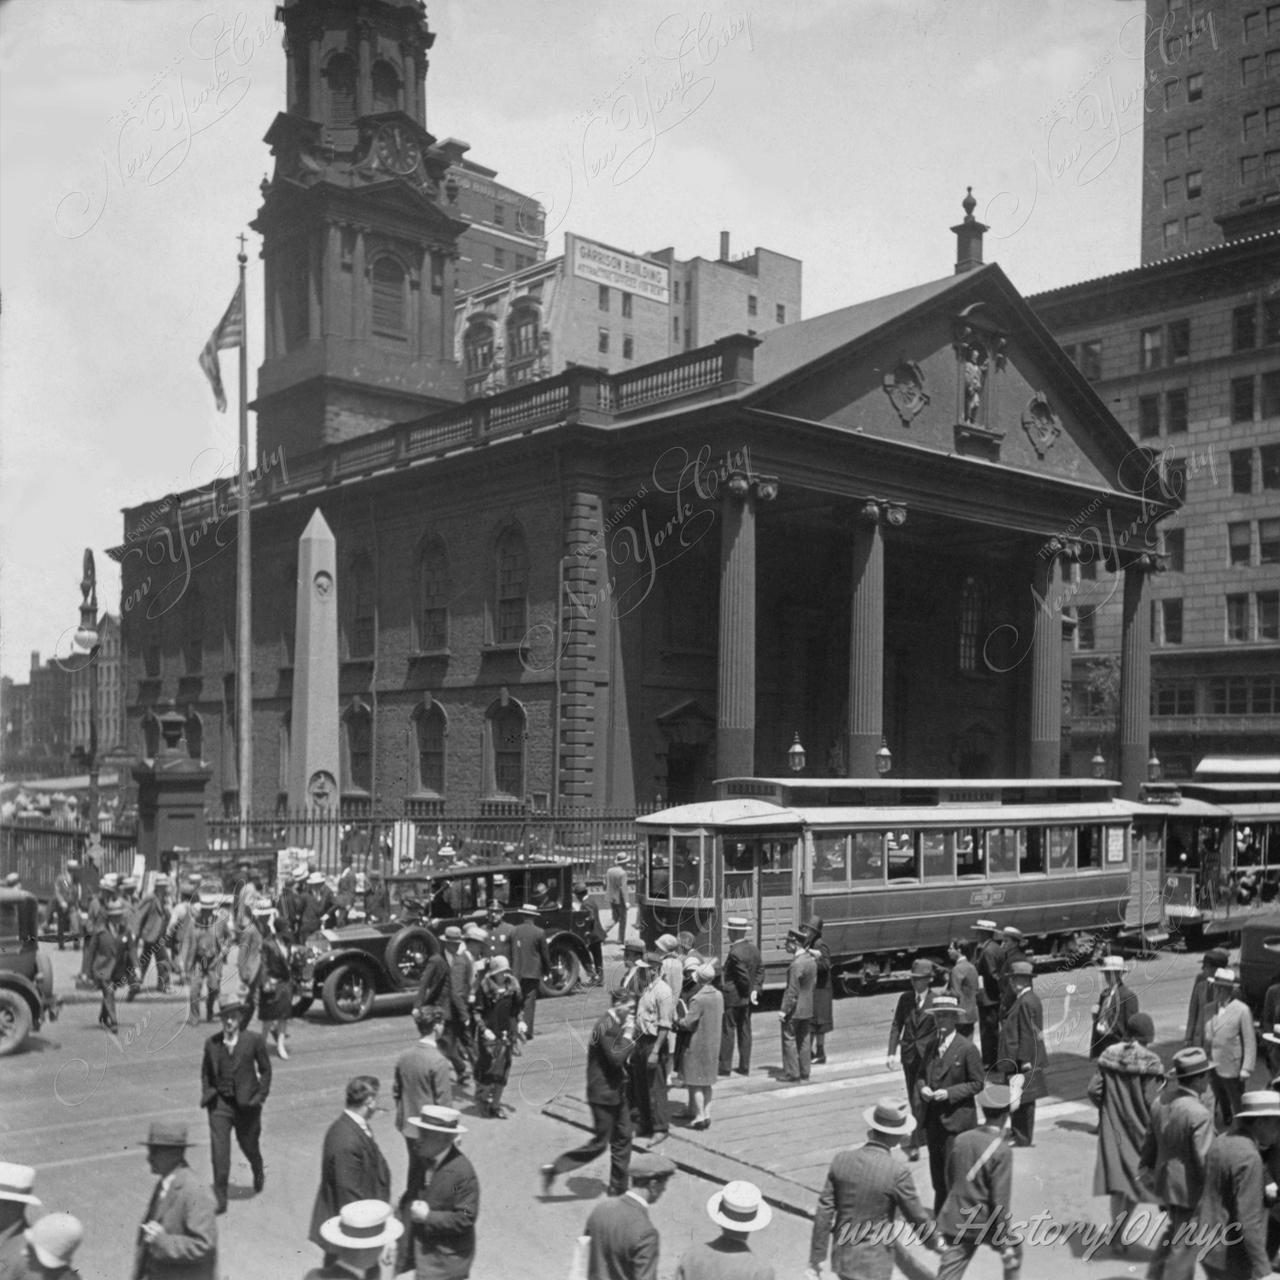 Saint Paul's Church - NYC in 1929